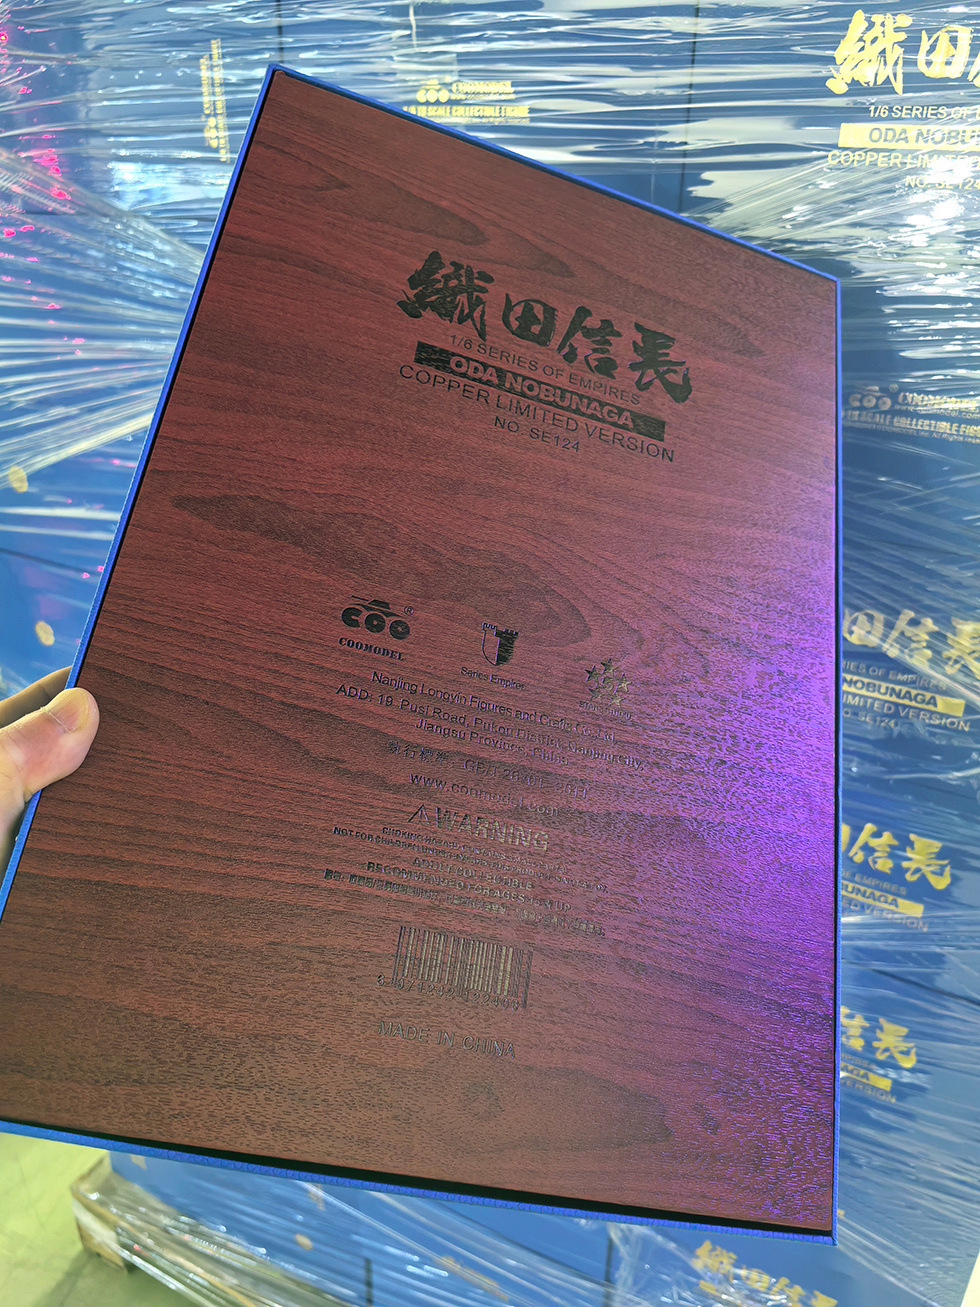 newproduct - NEW PRODUCT: COOMODEL: 1/6 Empire Series - Oda Nobunaga Samurai Edition/Hunting Edition/Pure Copper Standard Edition/Pure Copper Limited Collection Edition #SE124 B6b66012